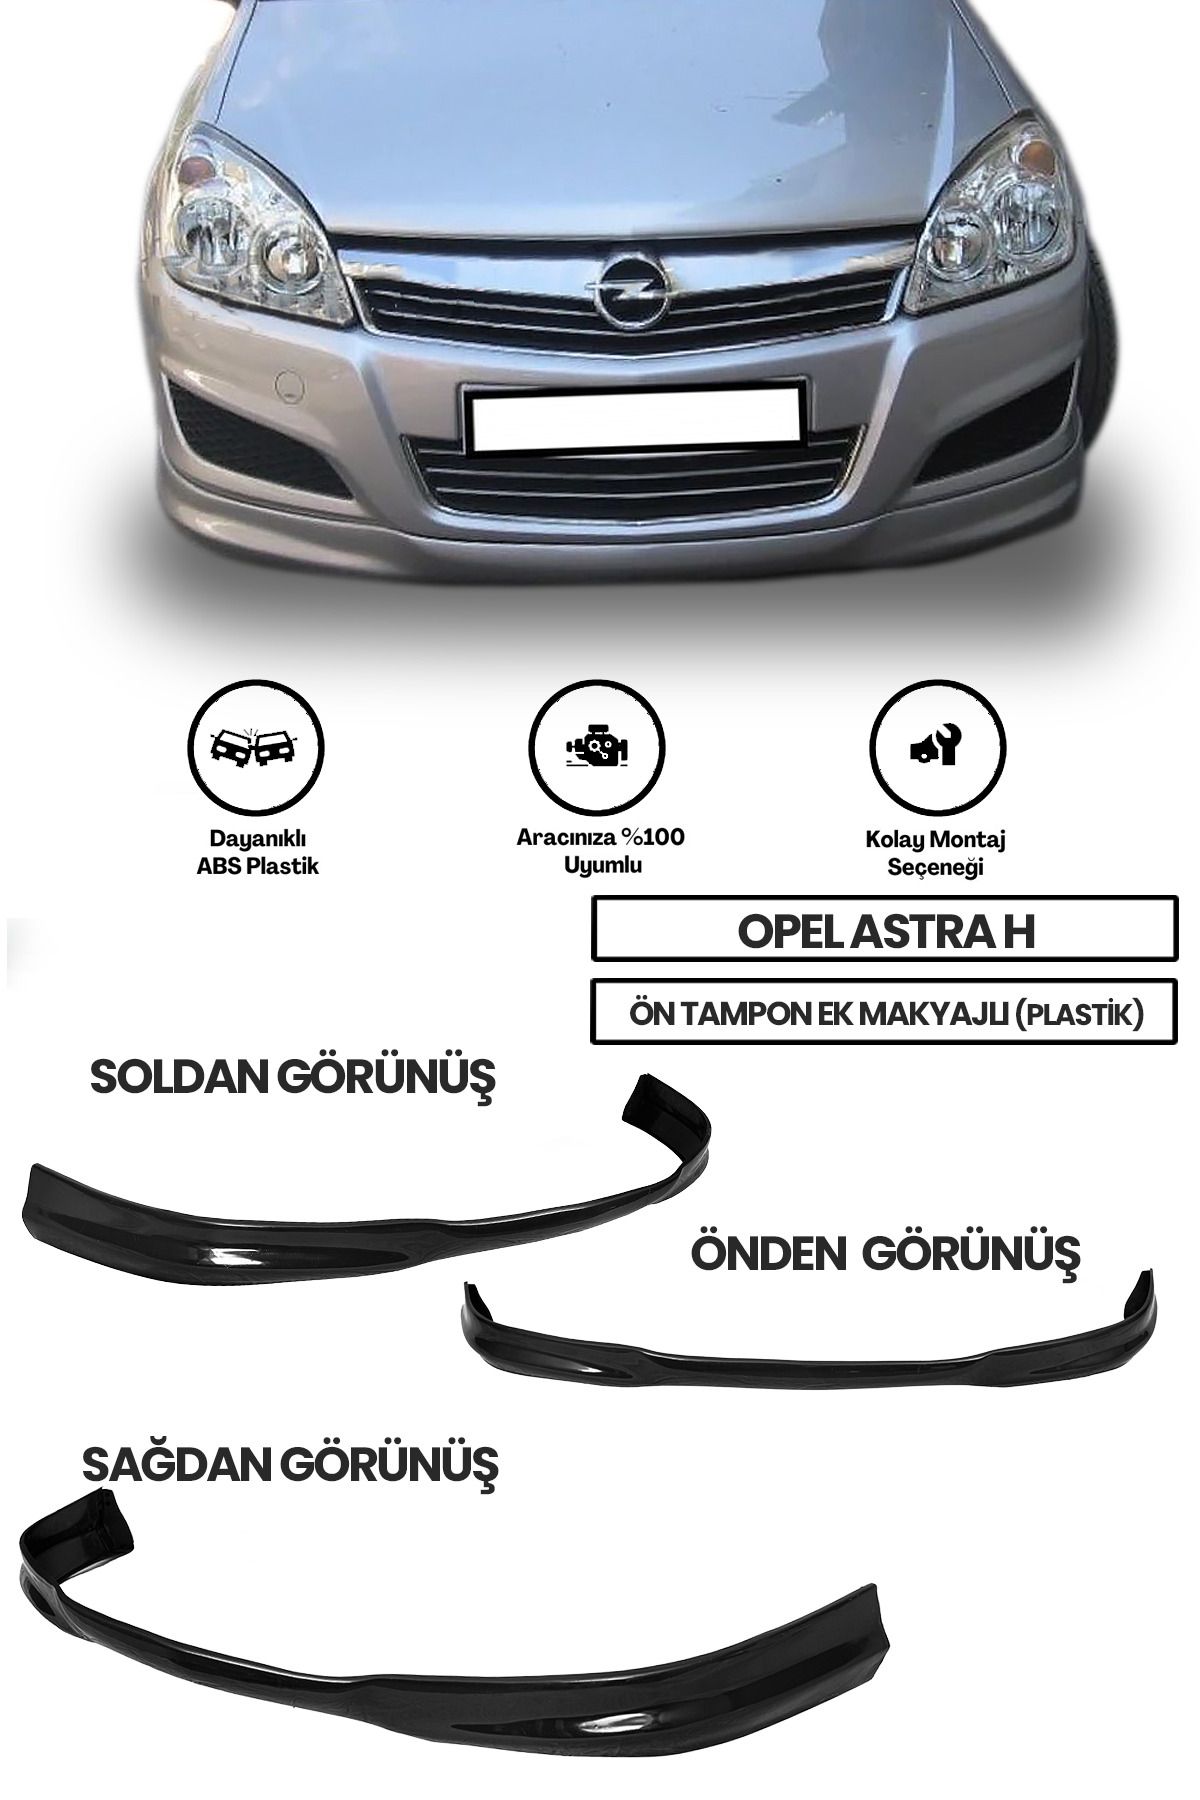 Opel Astra H Ön Ek Makyajlı (plastik)